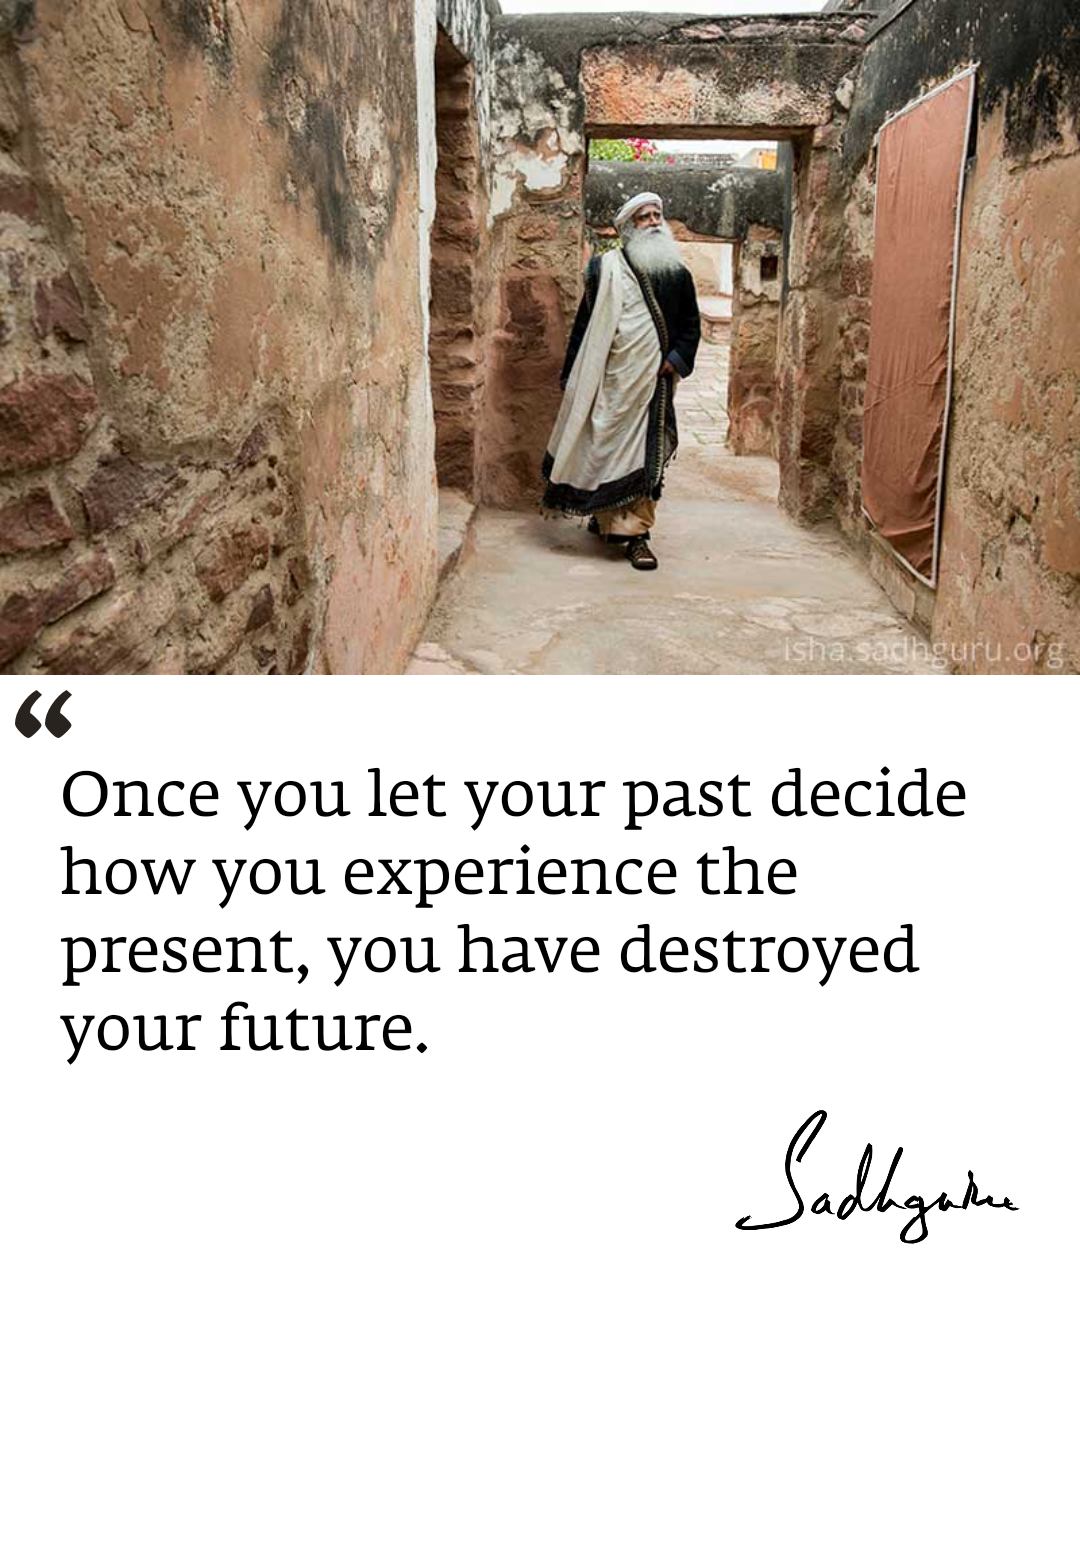 Don't let your past determine your future